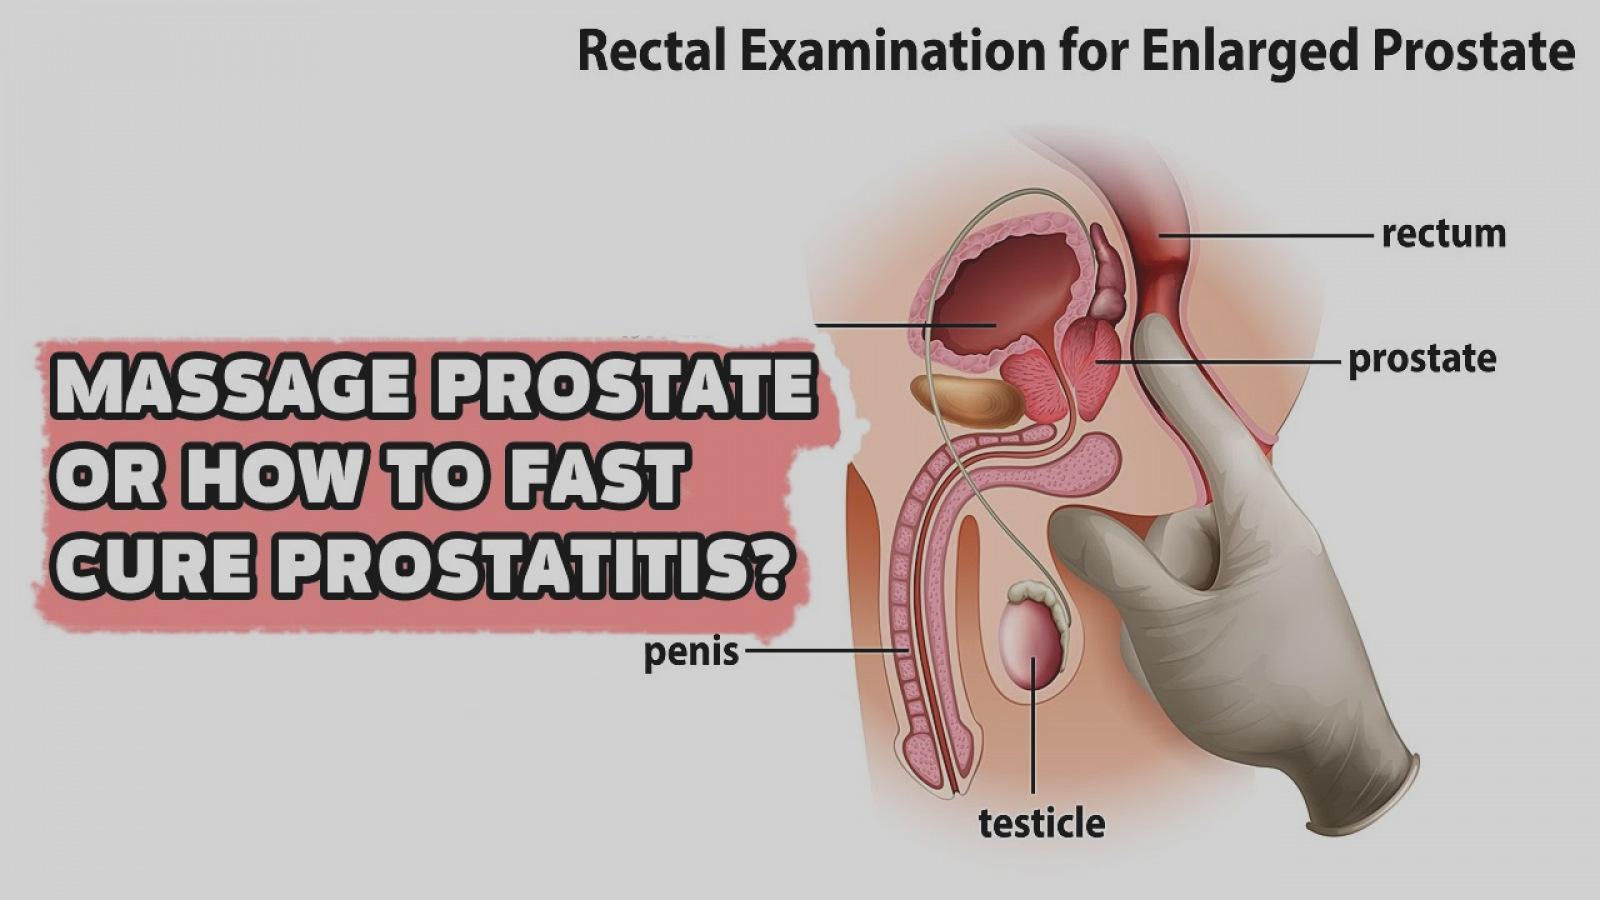 elegant-prostate-massage-for-prostatitis-massage-prostete-or-how-to-fast-cure-prostatitis-youtube.jpg